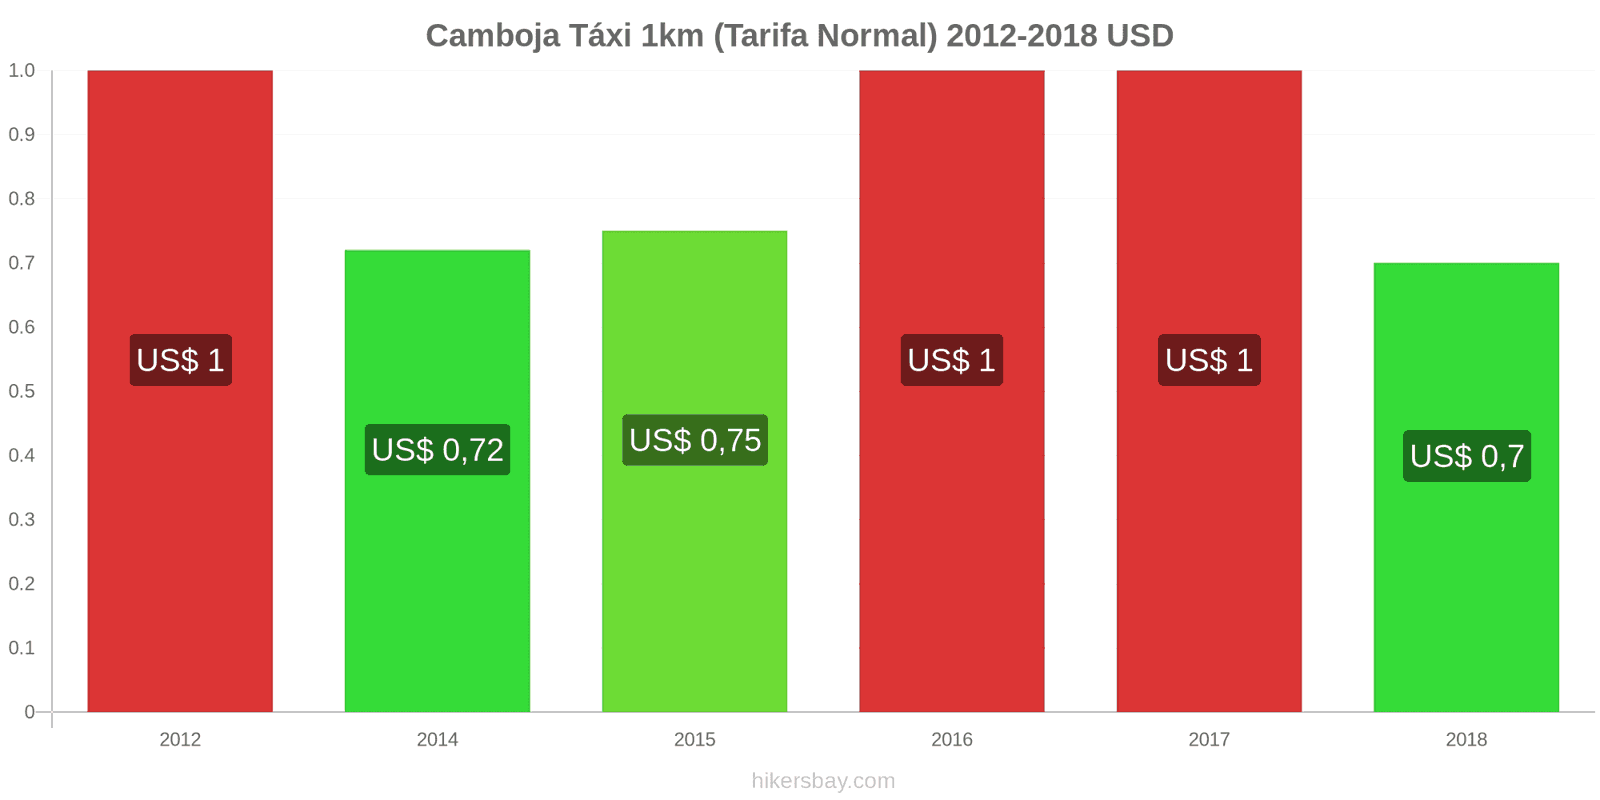 Camboja mudanças de preços Táxi 1km (Tarifa Normal) hikersbay.com